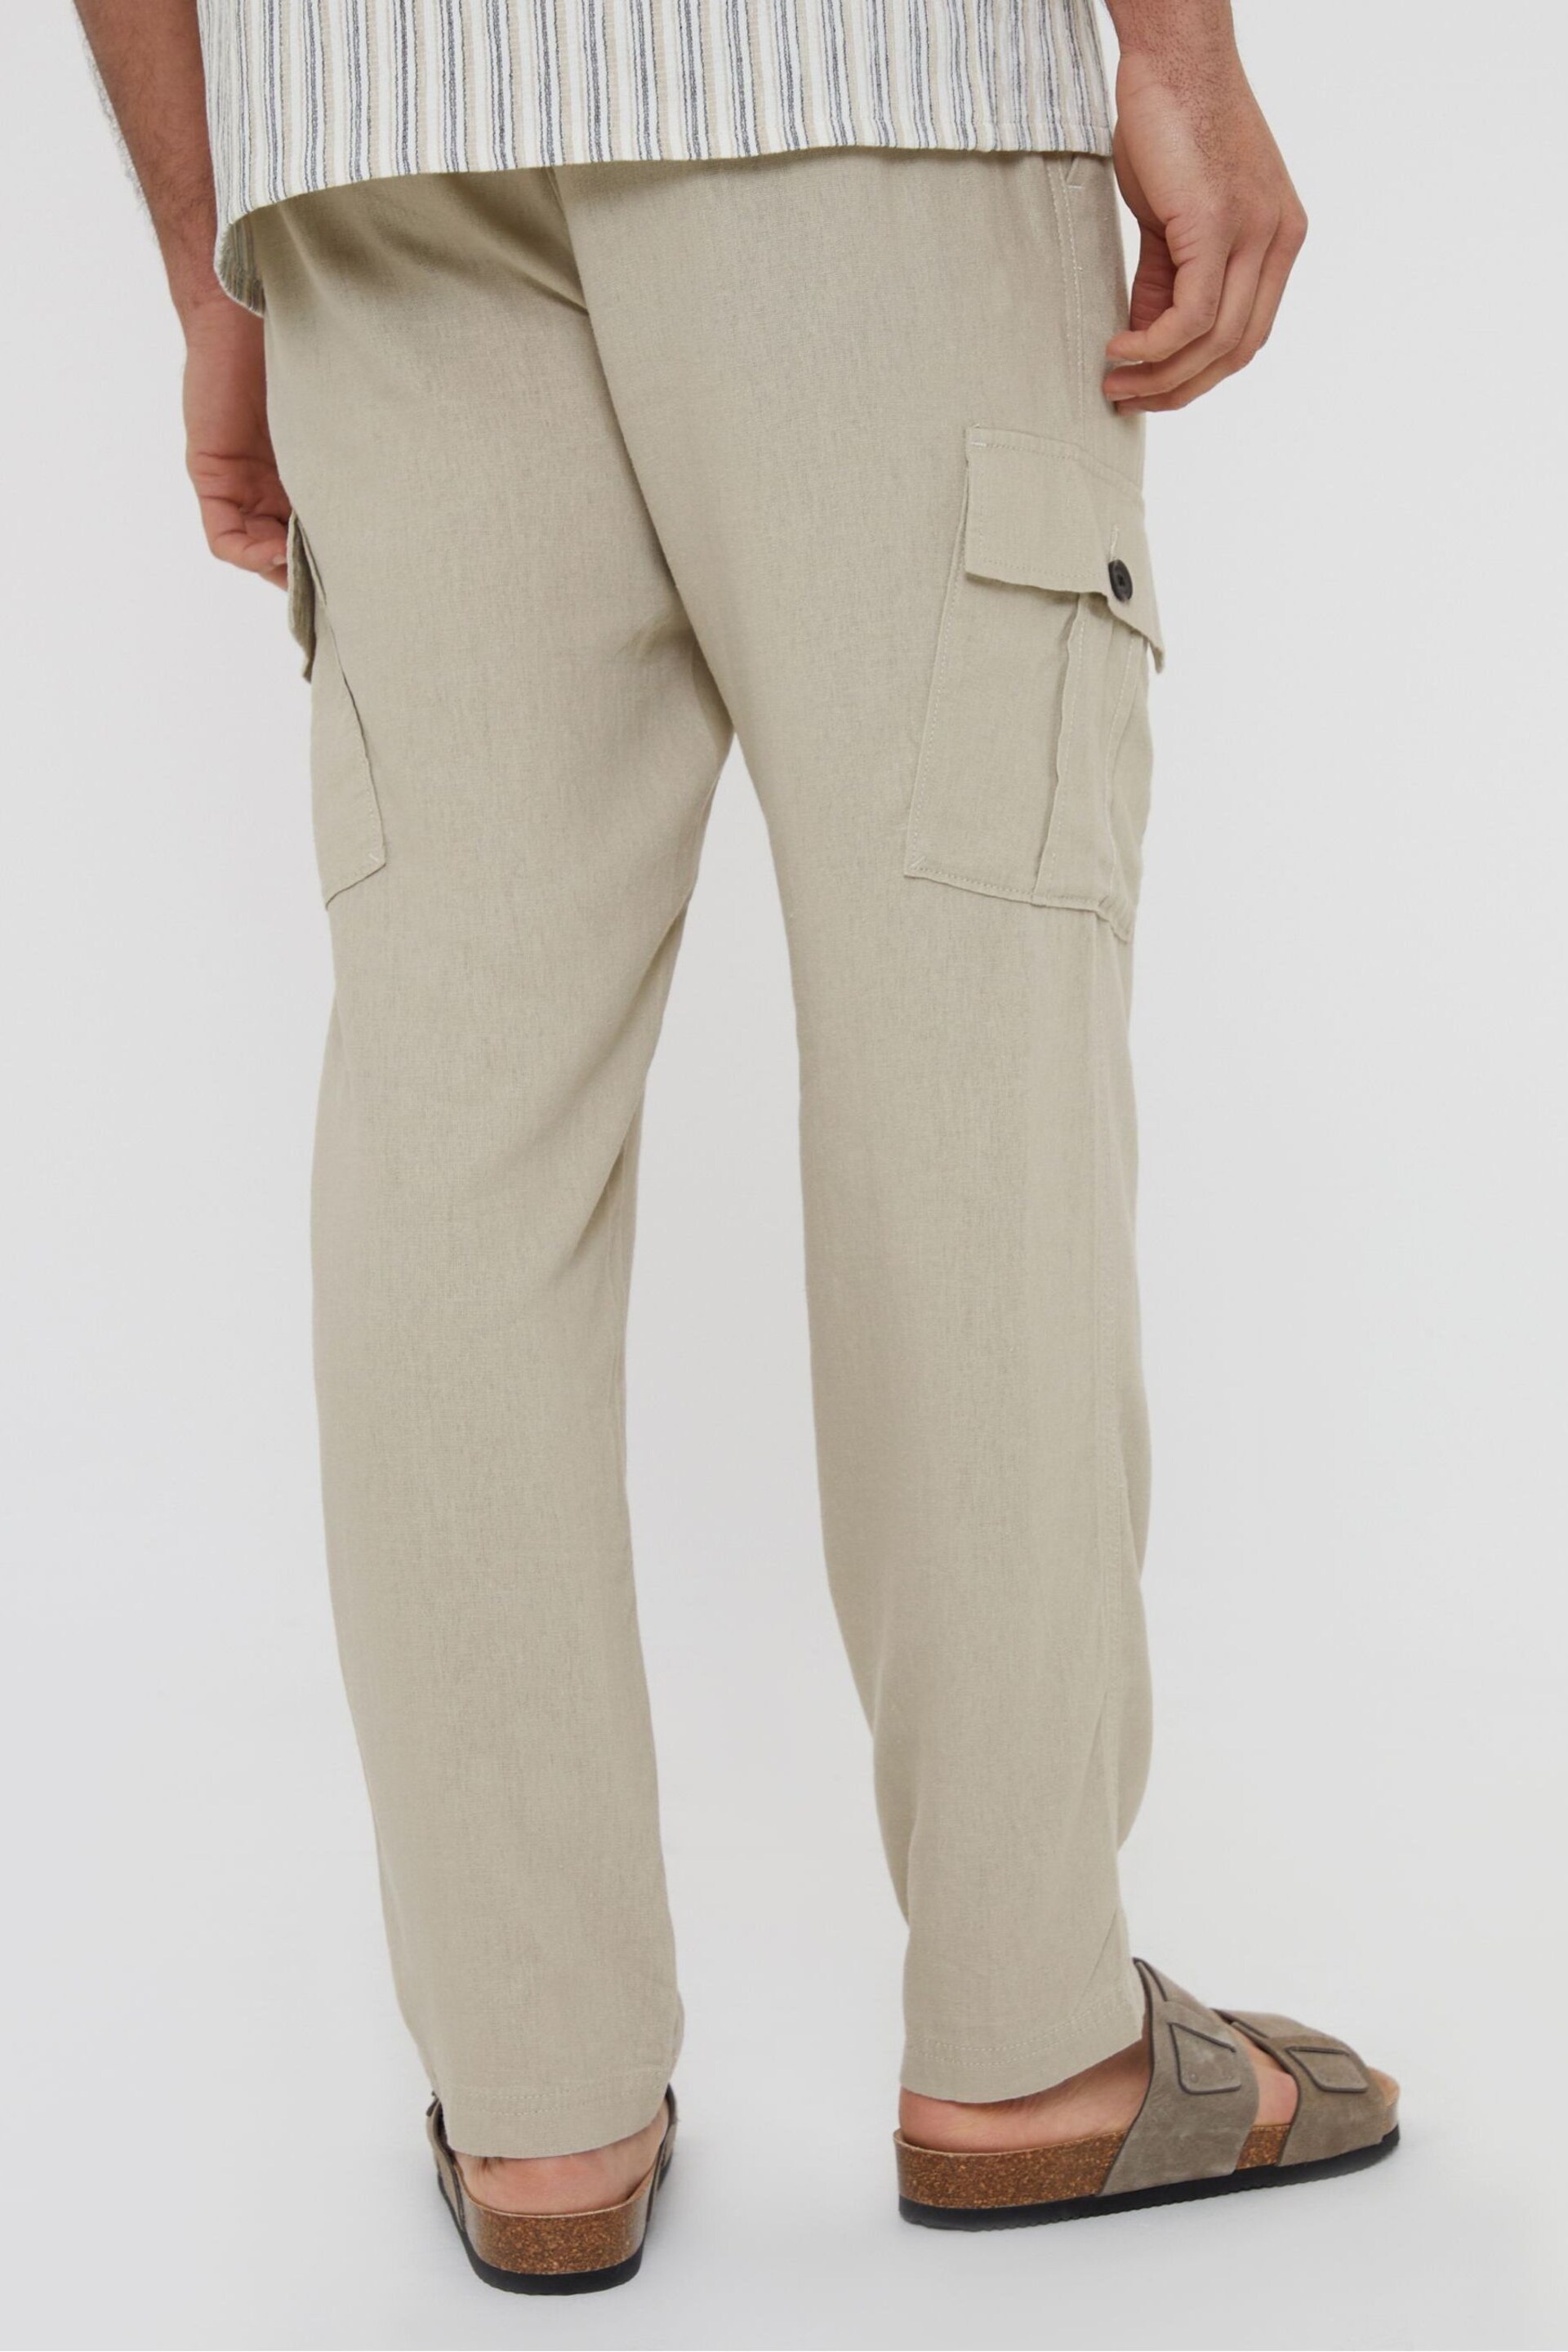 Threadbare Cream Linen Blend Cargo Trousers - Image 2 of 5